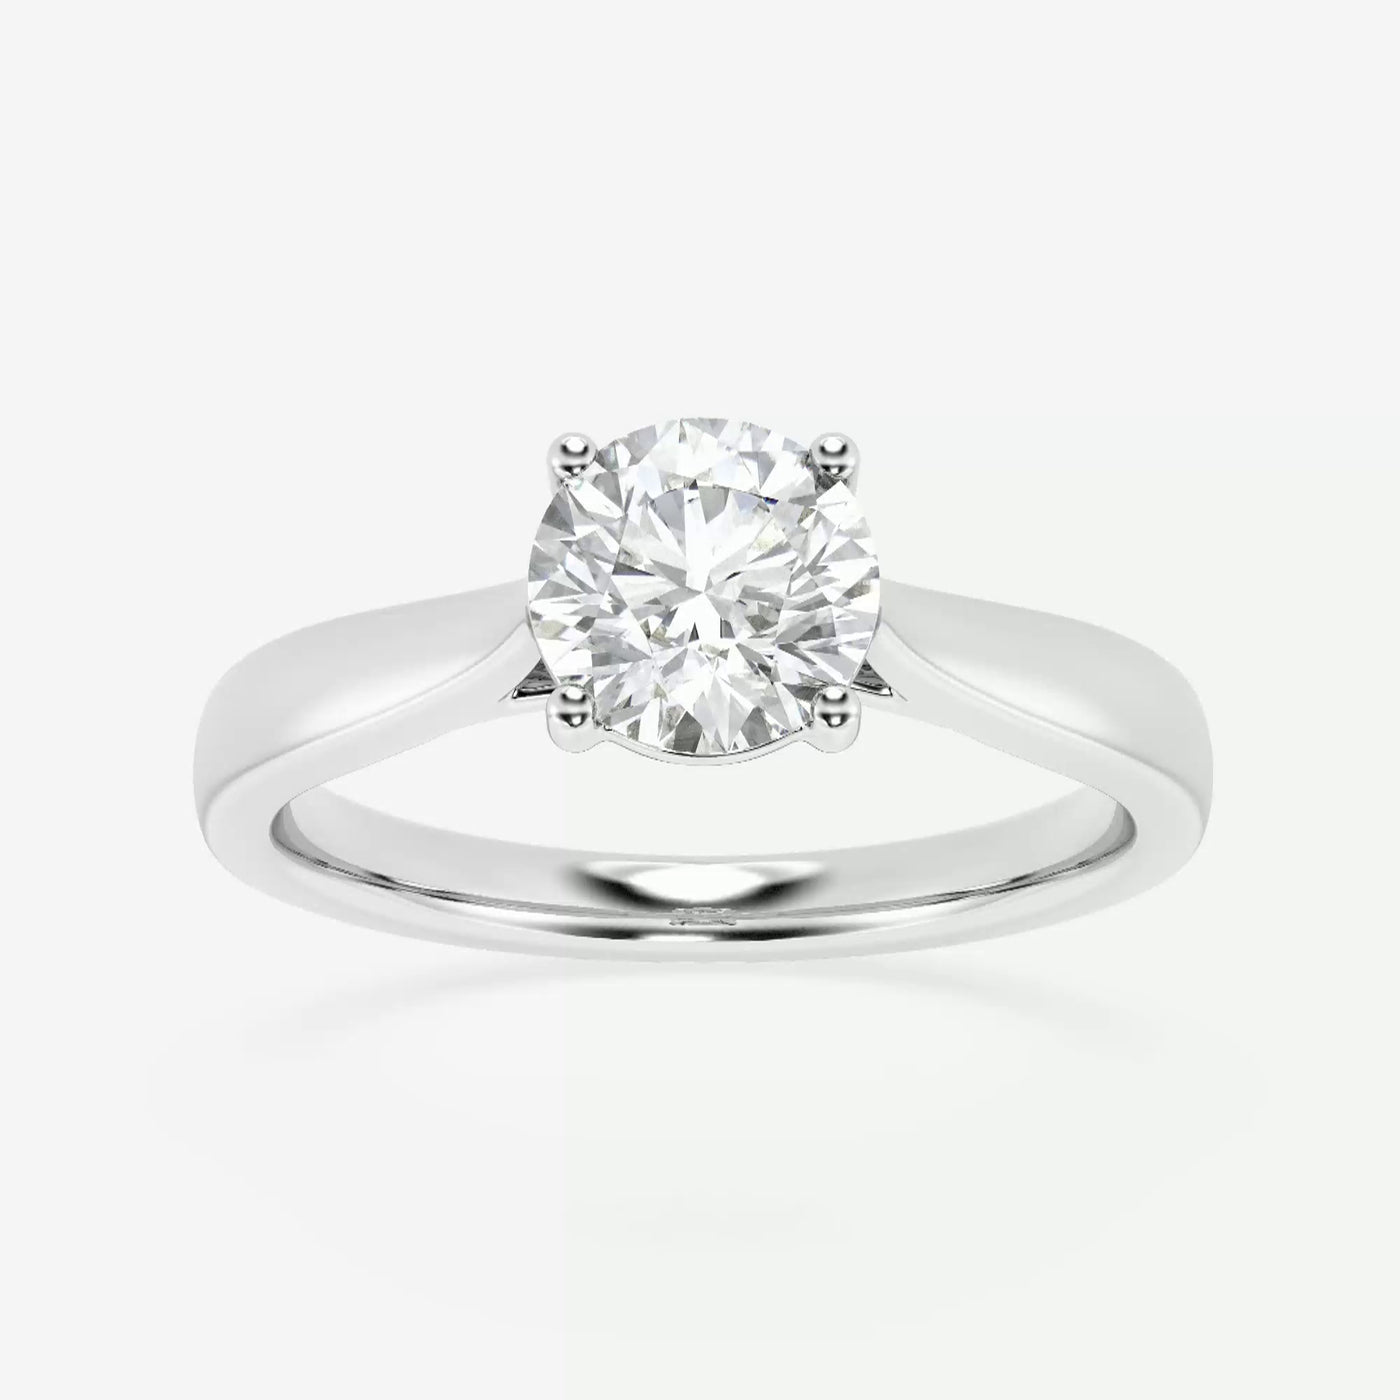 _main_image@SKU:LGD-JOR1035-GW3~#carat_1.00#diamond-quality_def,-vs1+#metal_18k-white-gold